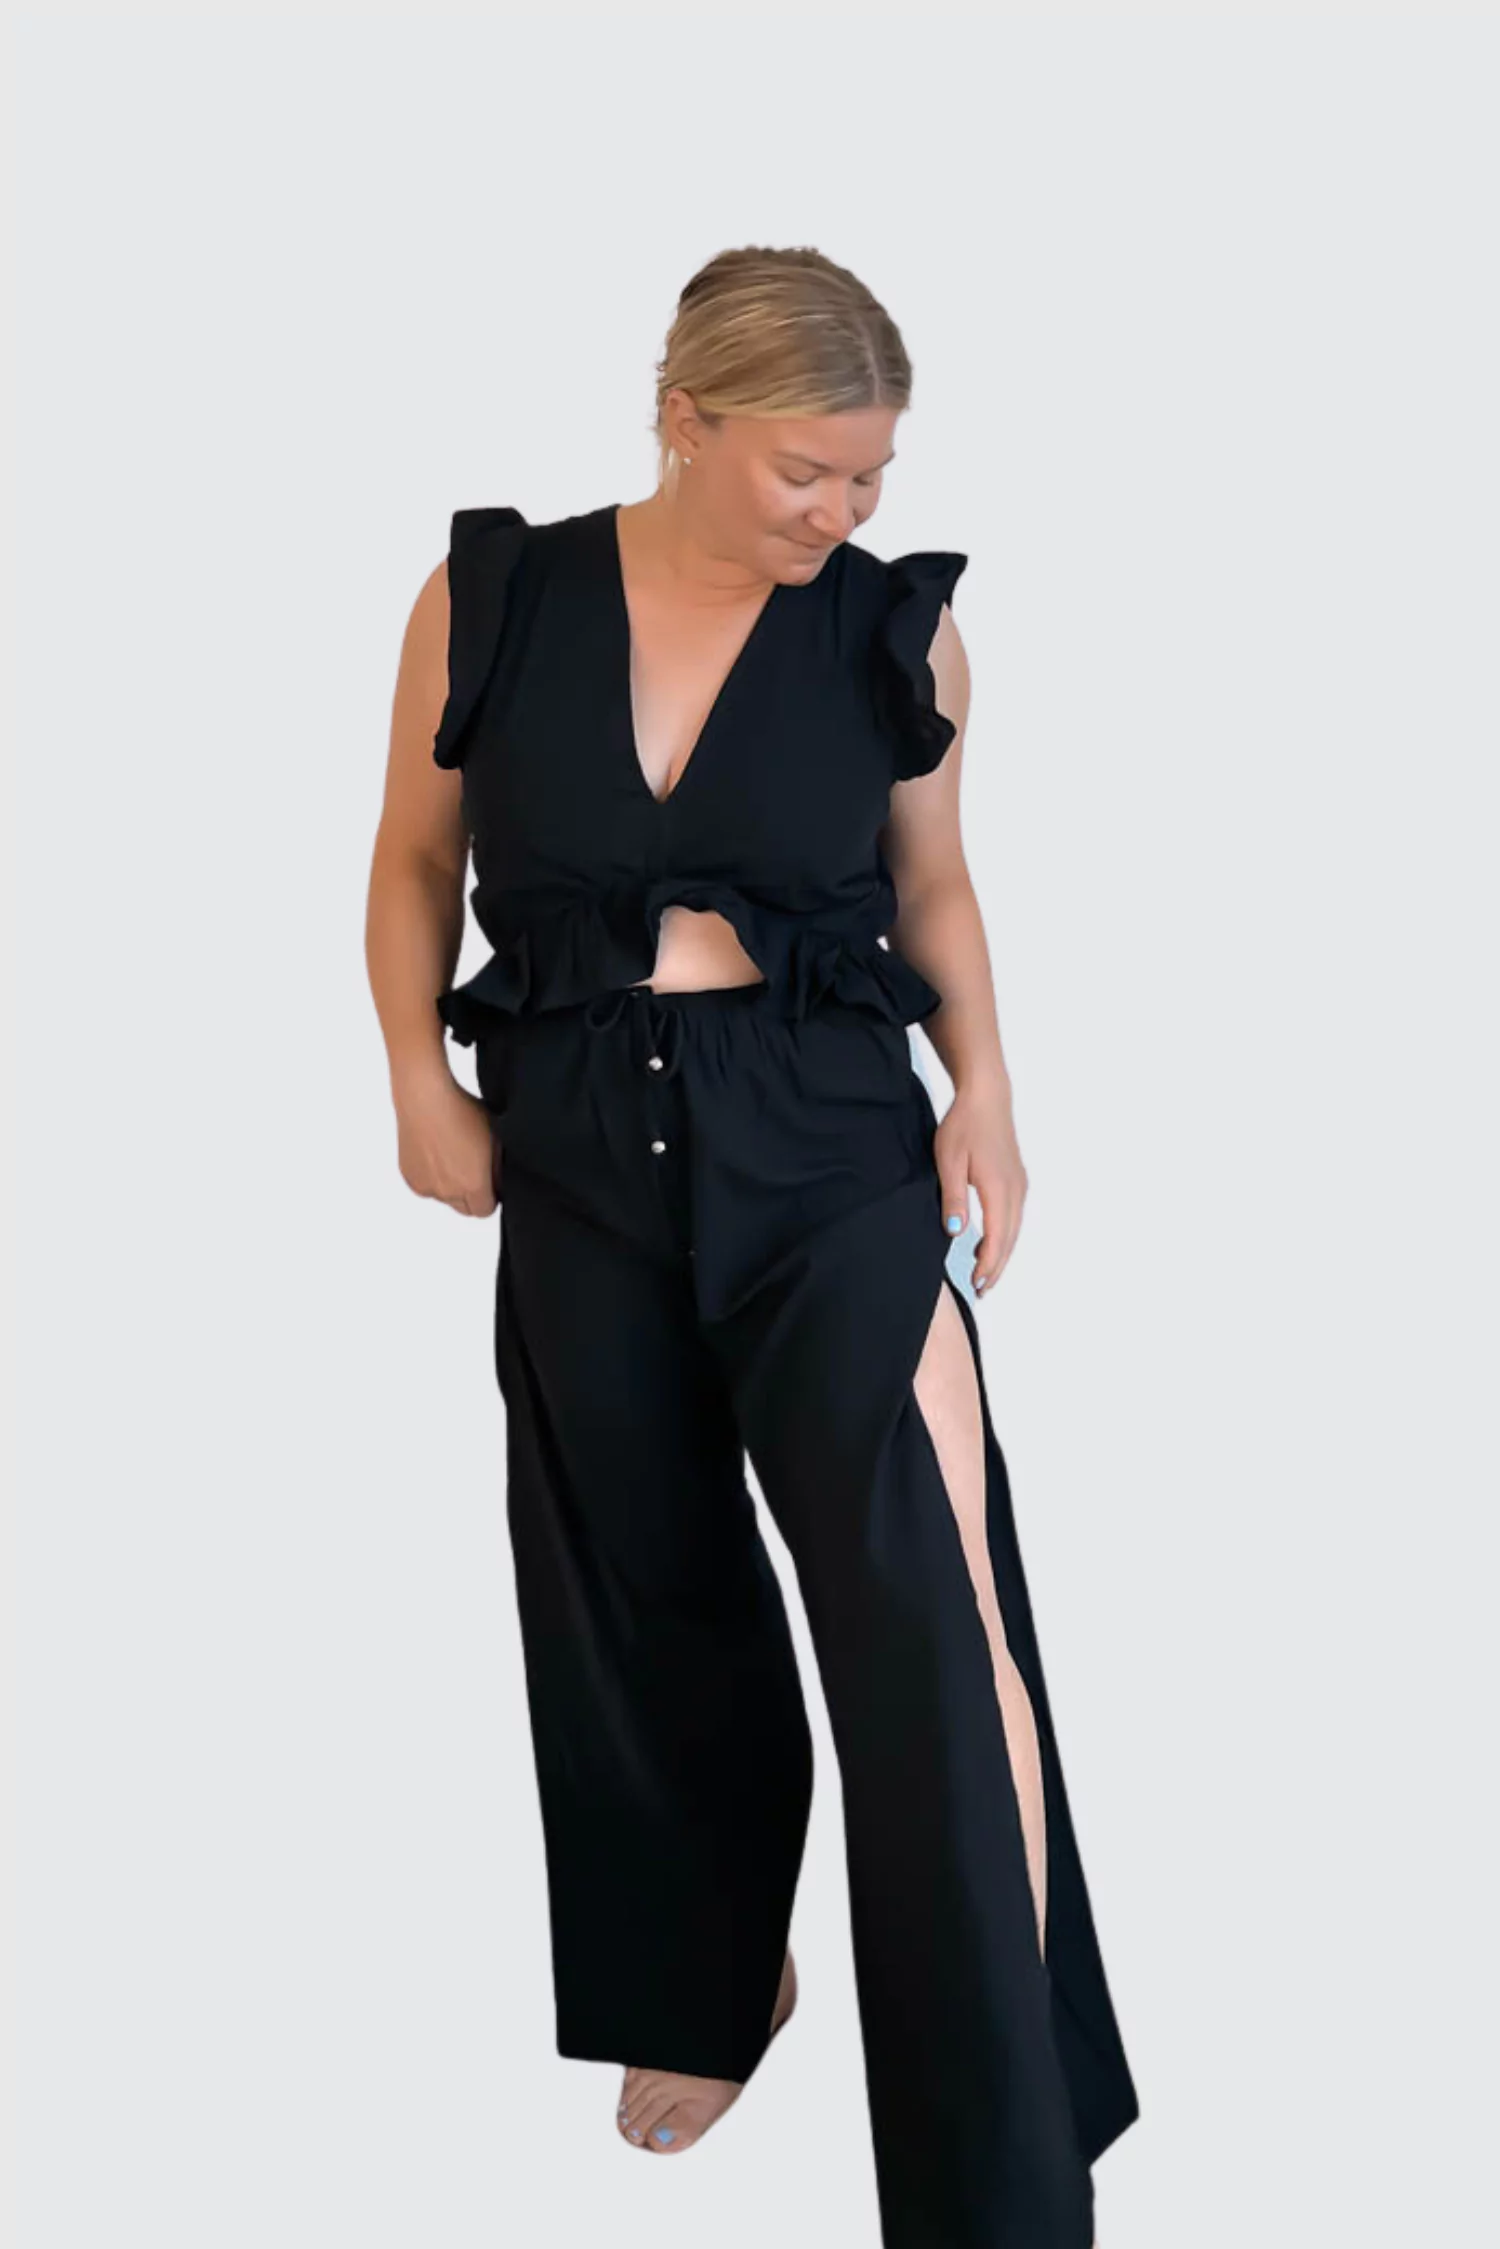 FANCYINN 2 Pieces Black Beach Jumpsuits Outfits for Women